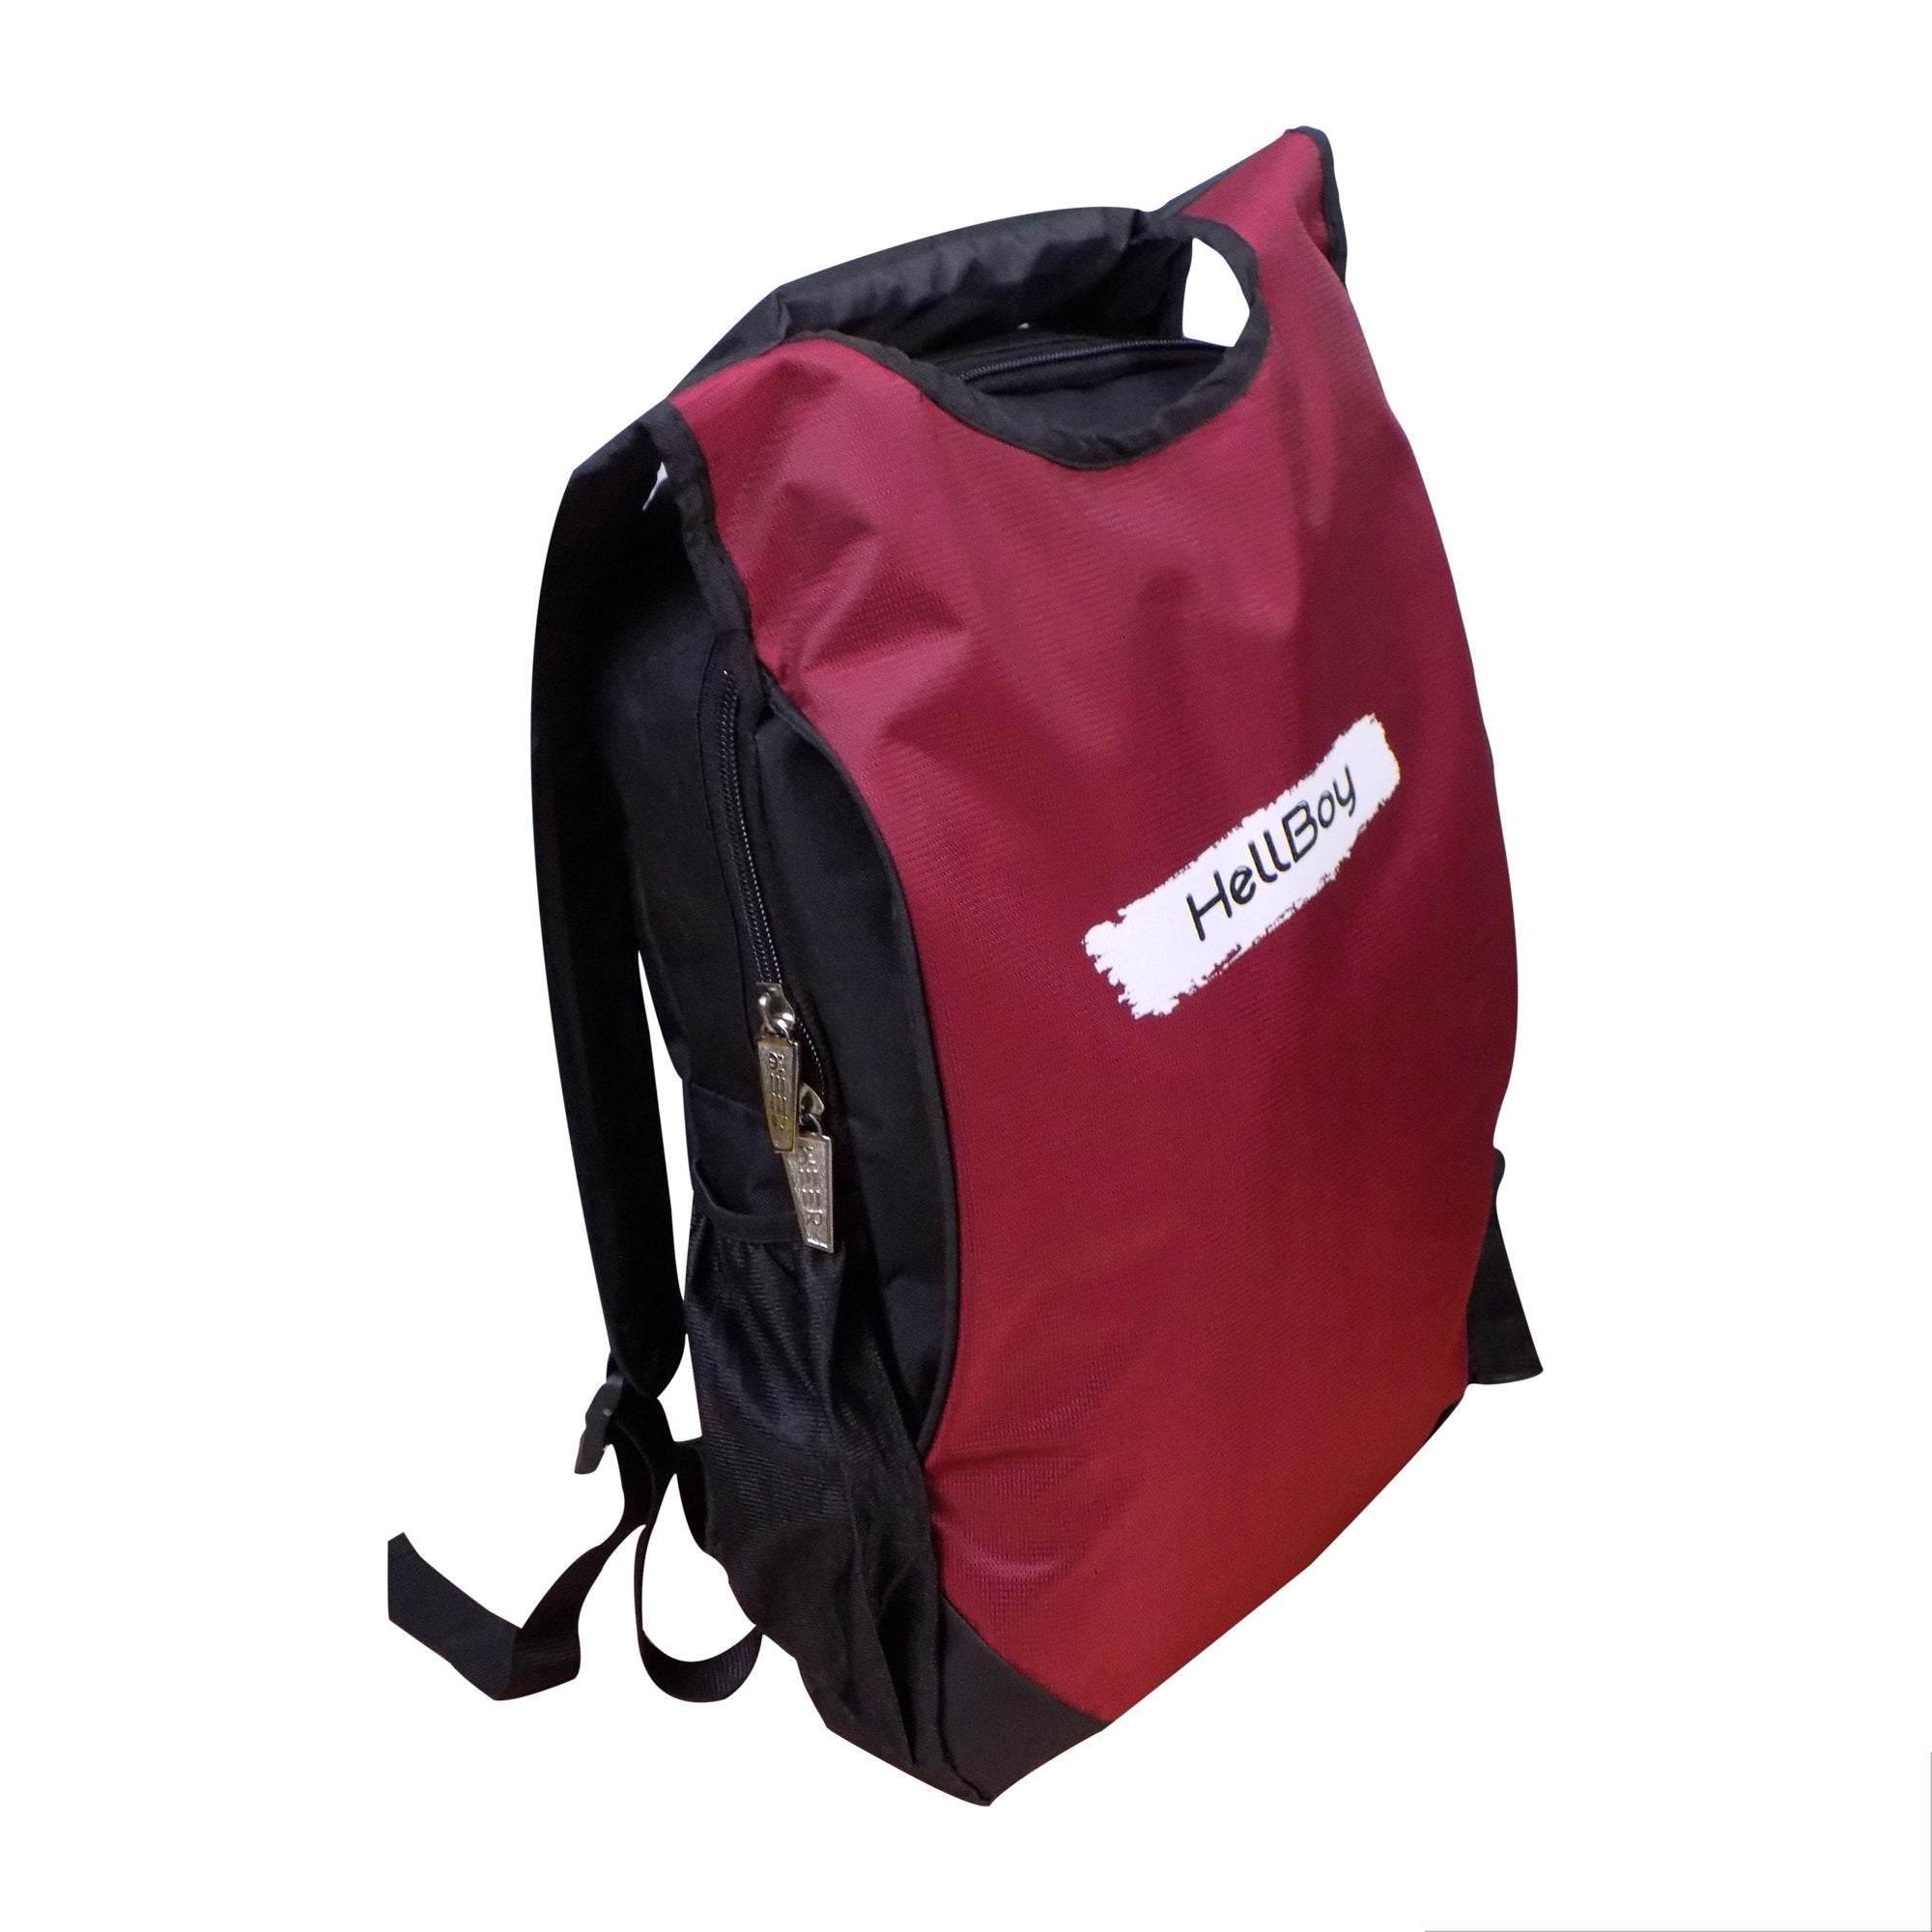 1373 Tuition Bag (Multicolour) - SkyShopy